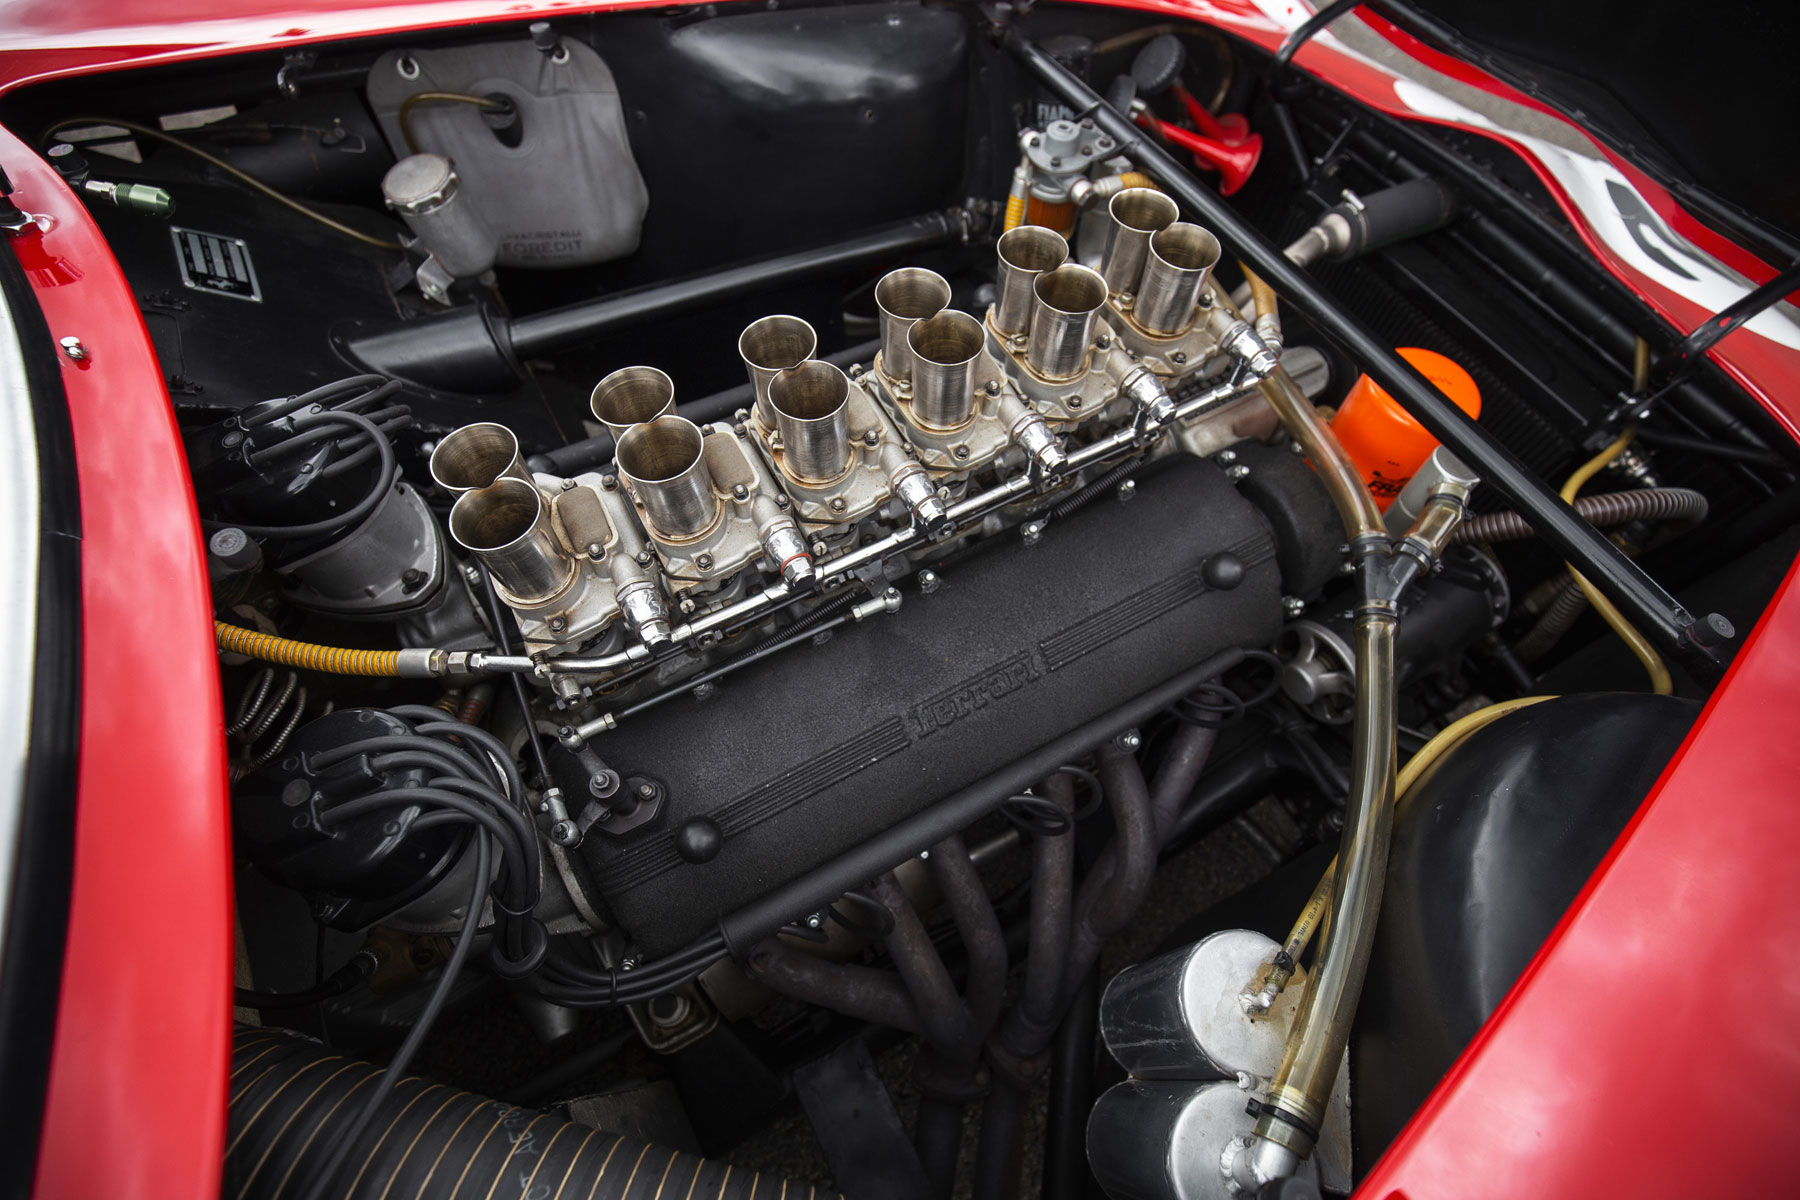 1962 Ferrari 250 GTO engine